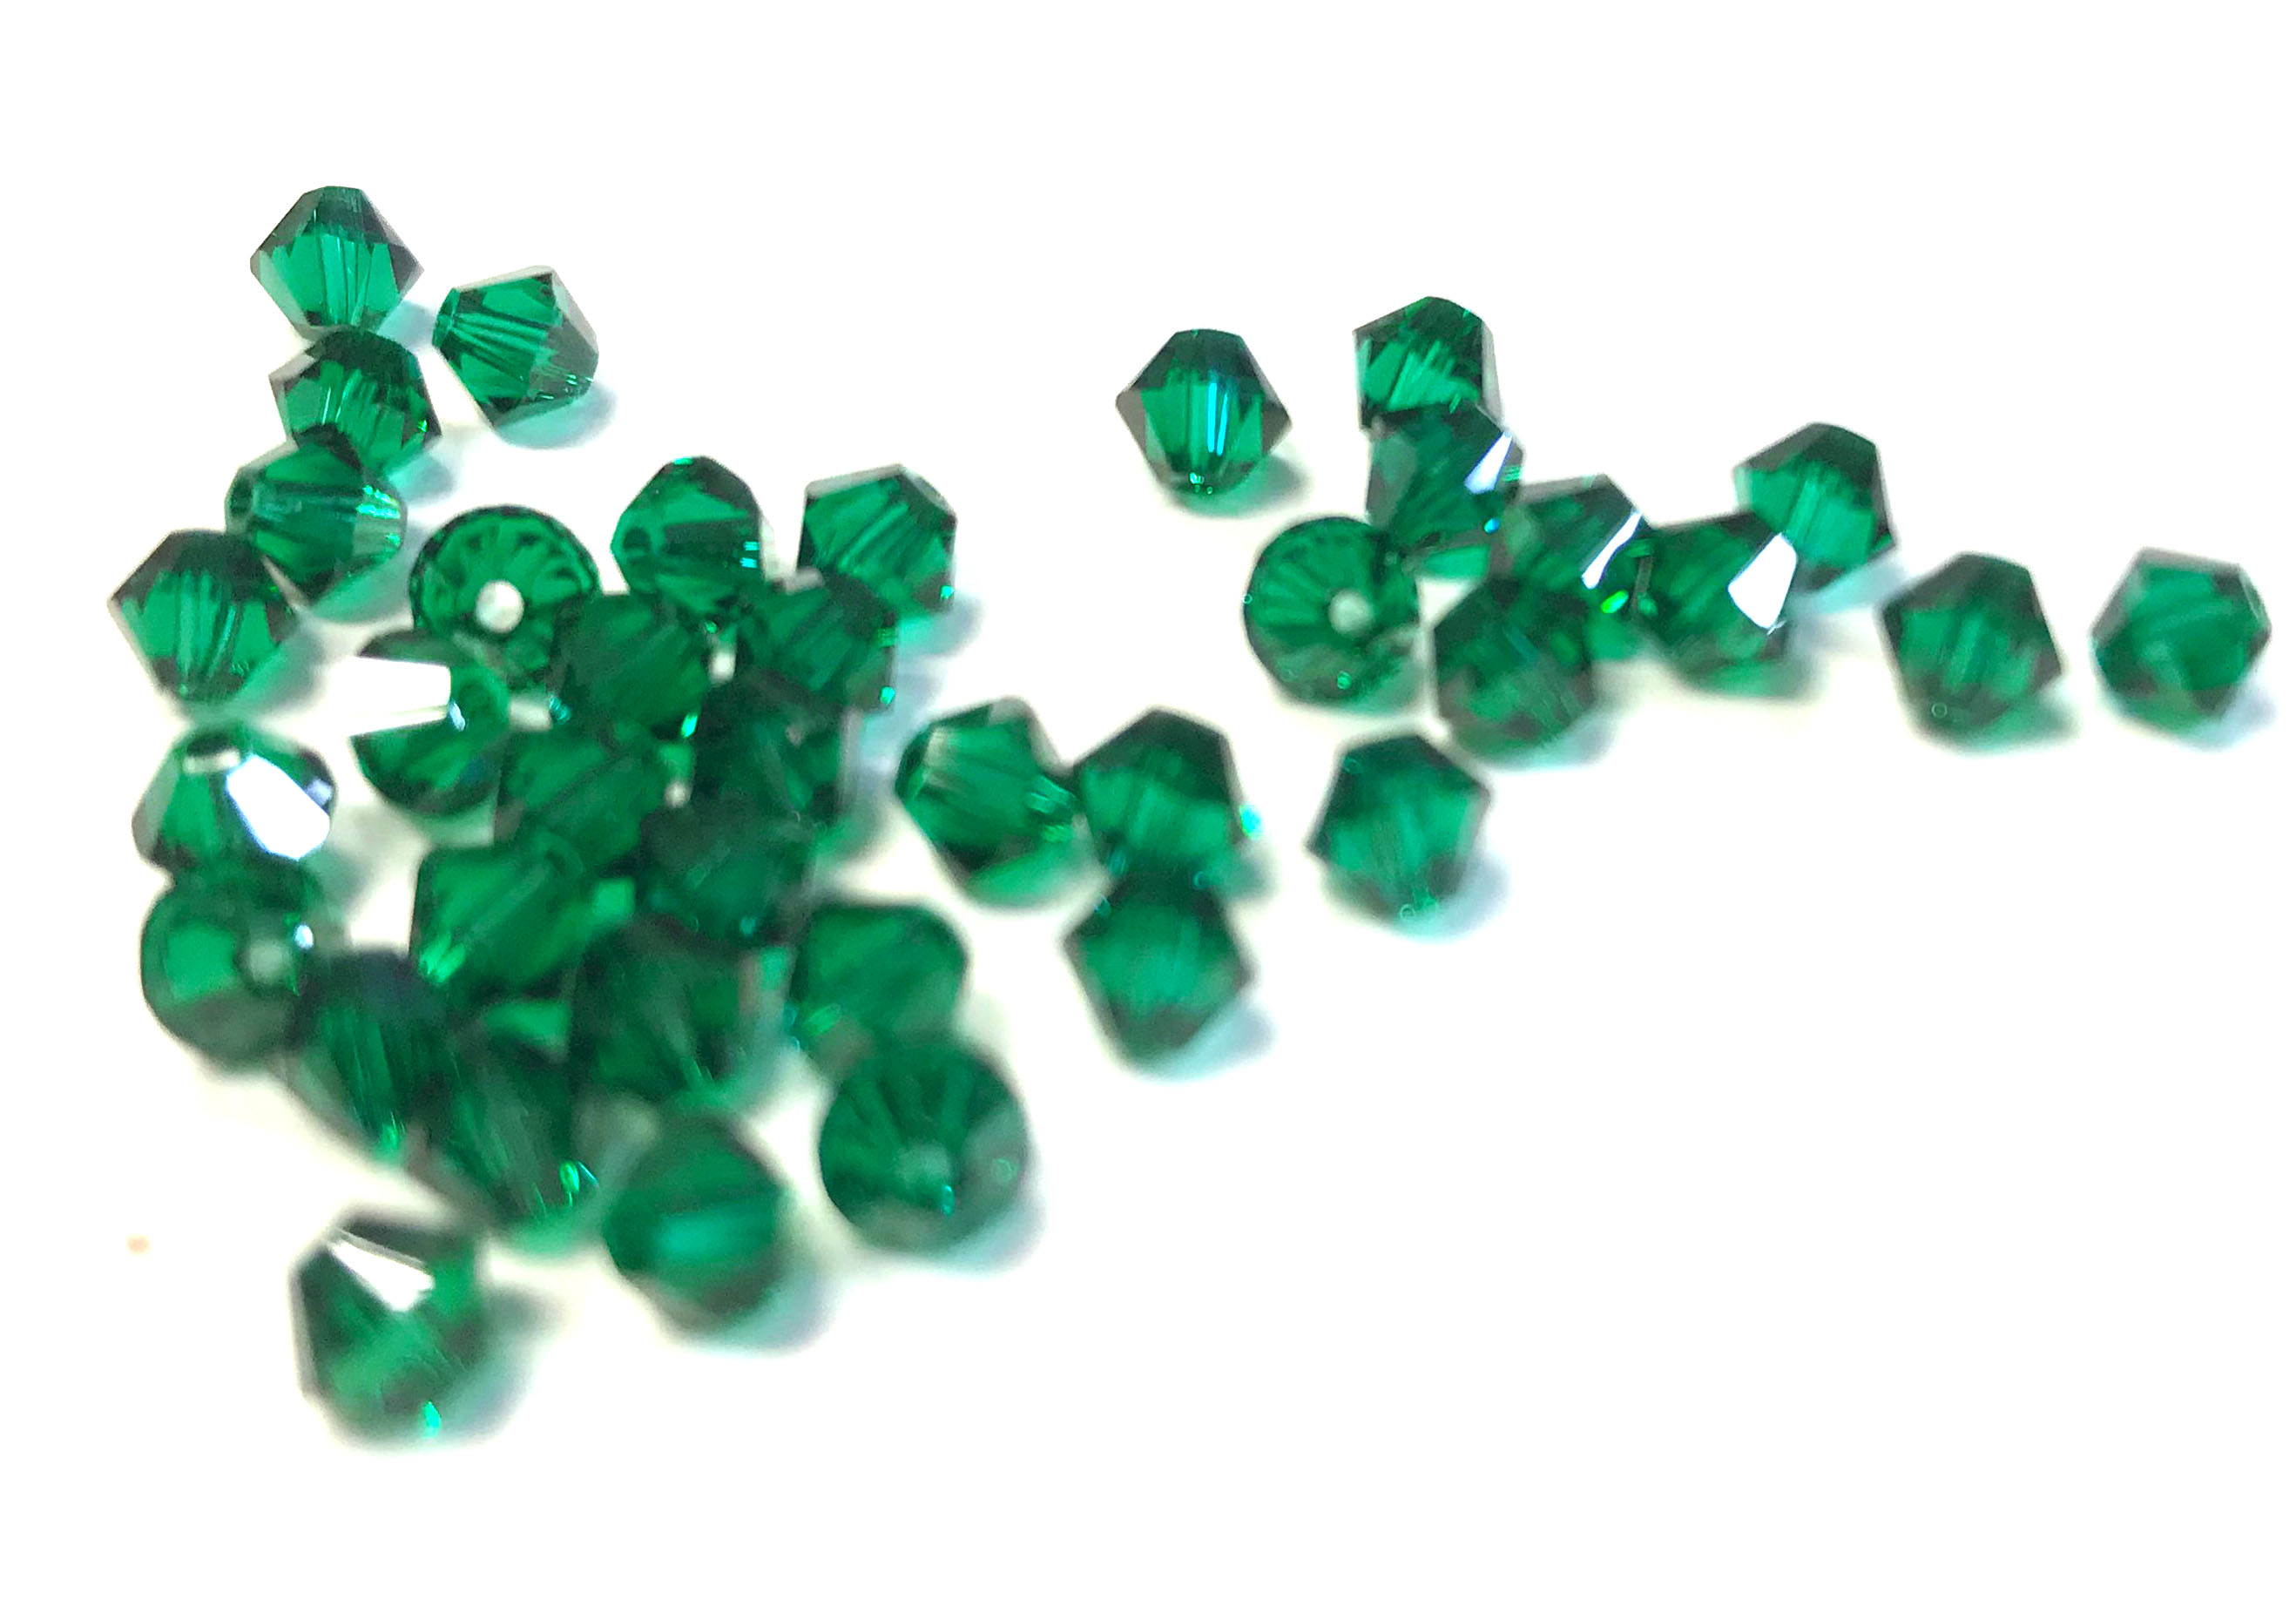 Swarovski Doppelkegel  Emerald, Bicone